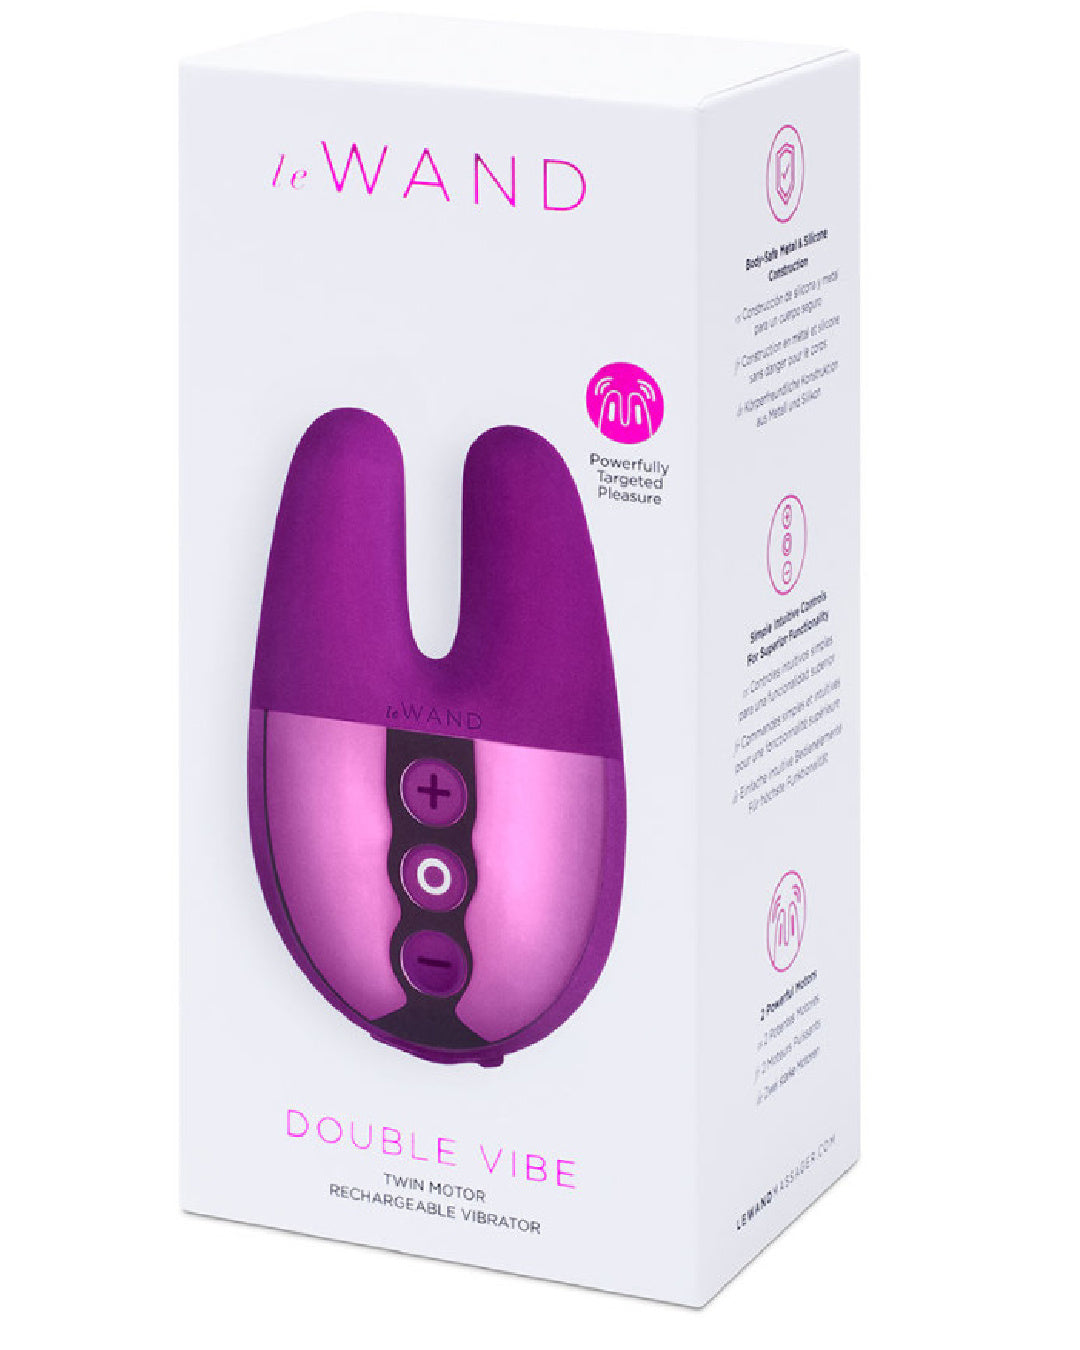 Le Wand Chrome Double Vibrator - Purple product box 